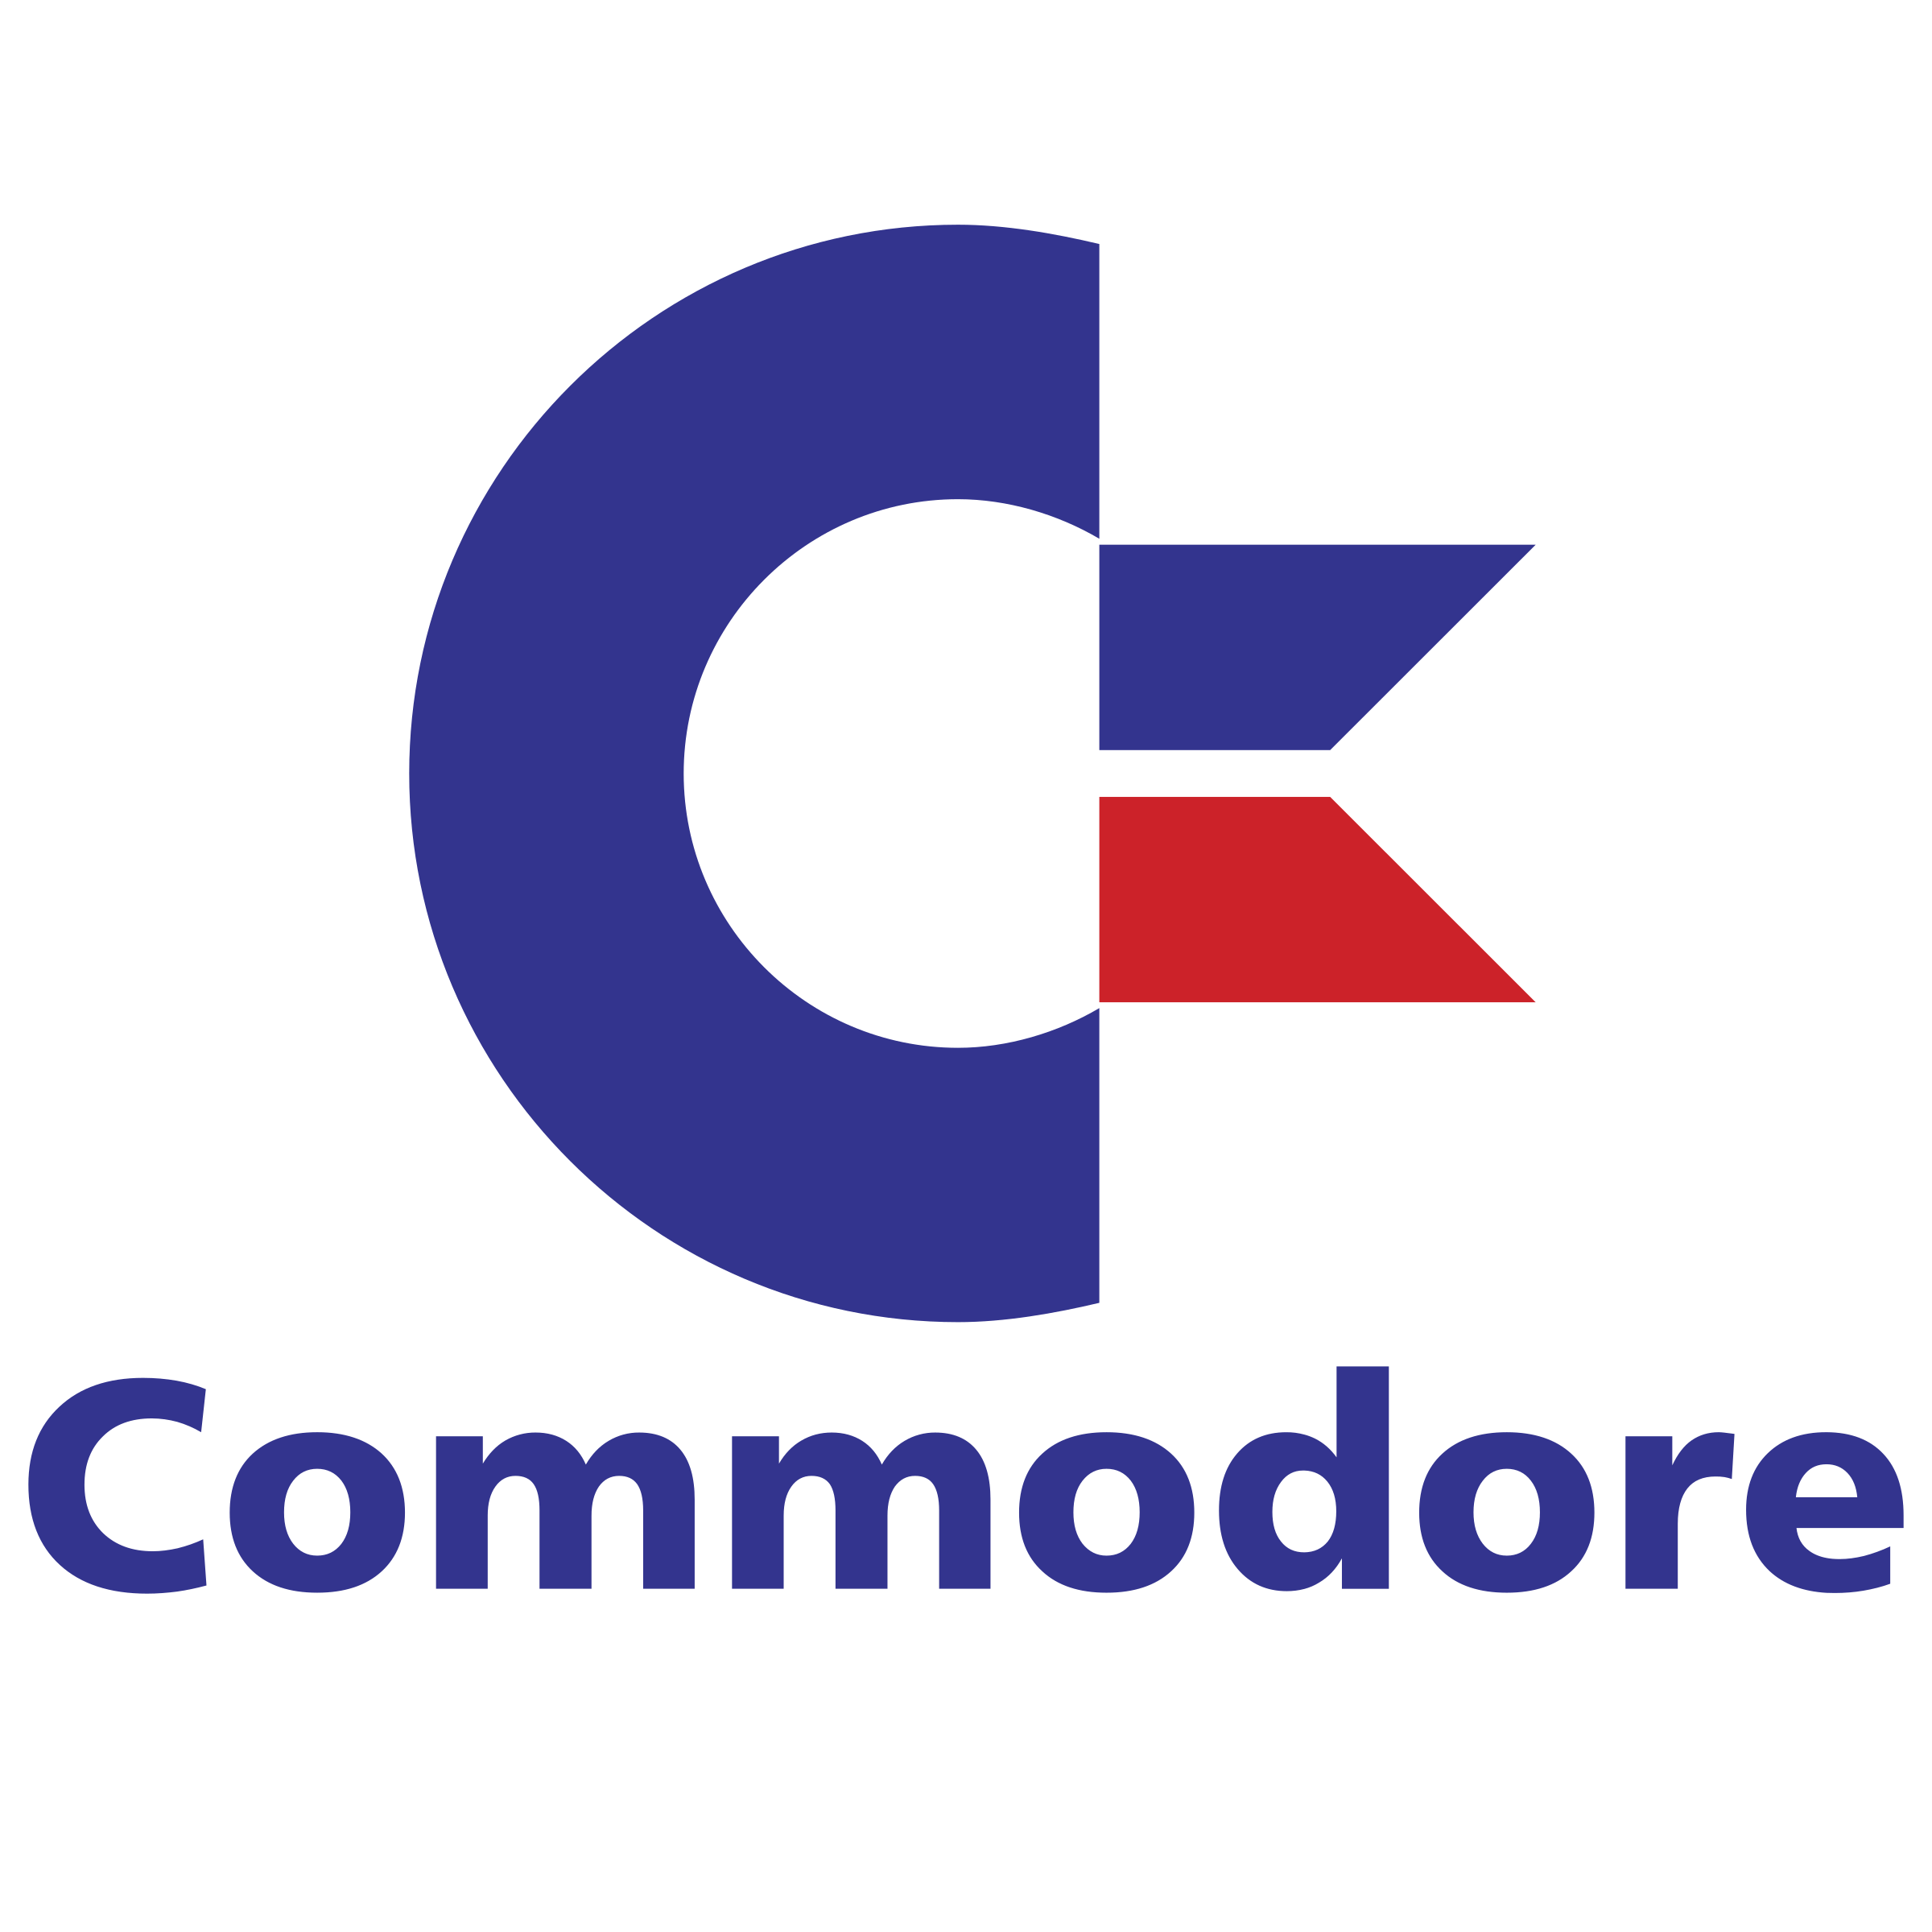 Commodore Logo - Commodore Logo PNG Transparent & SVG Vector